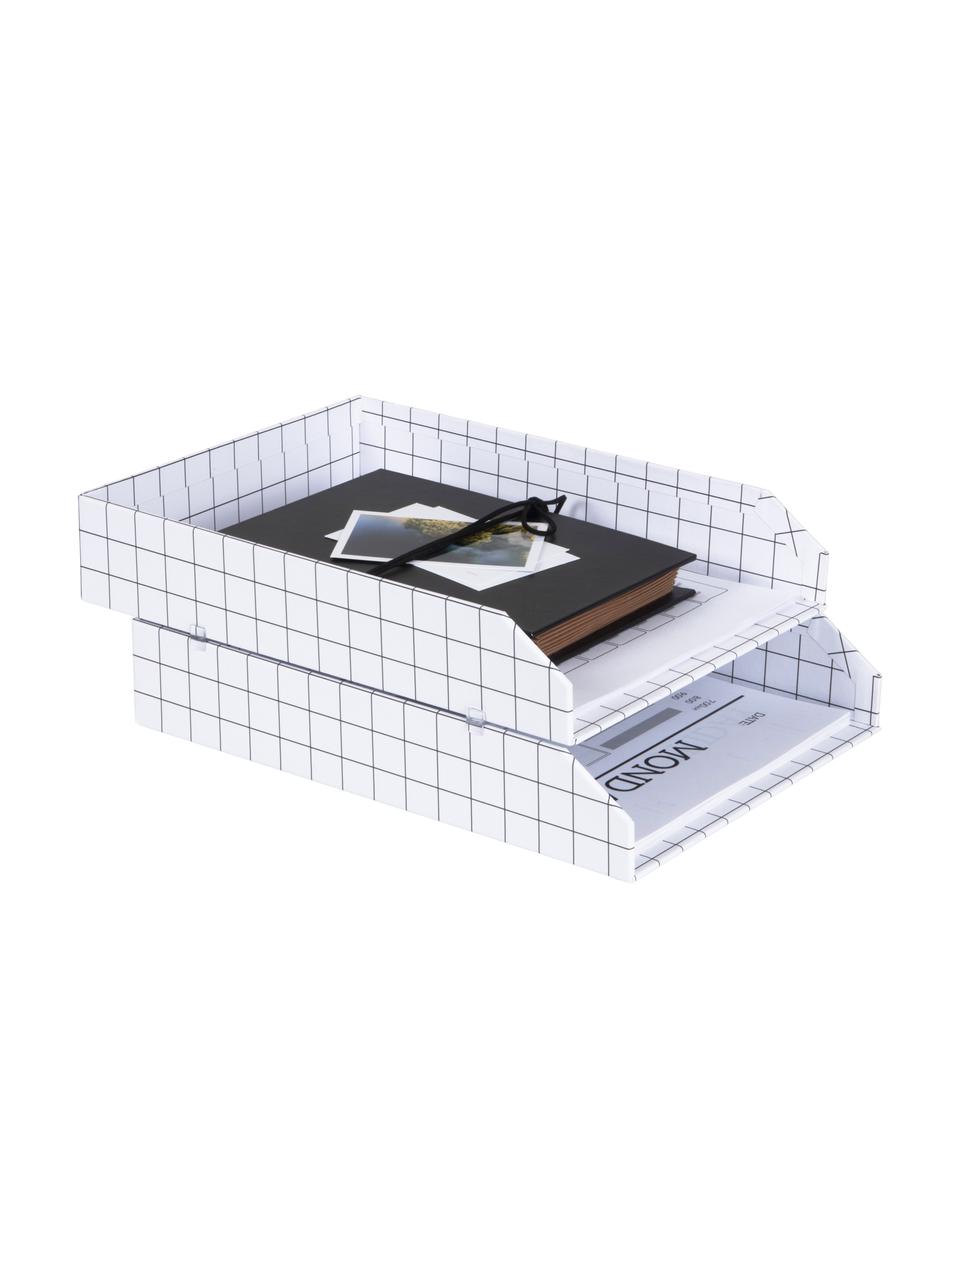 Vassoio documenti Hakan 2 pz, Cartone solido laminato
(100% carta riciclata), Bianco, nero, Larg. 23 x Alt. 6 cm